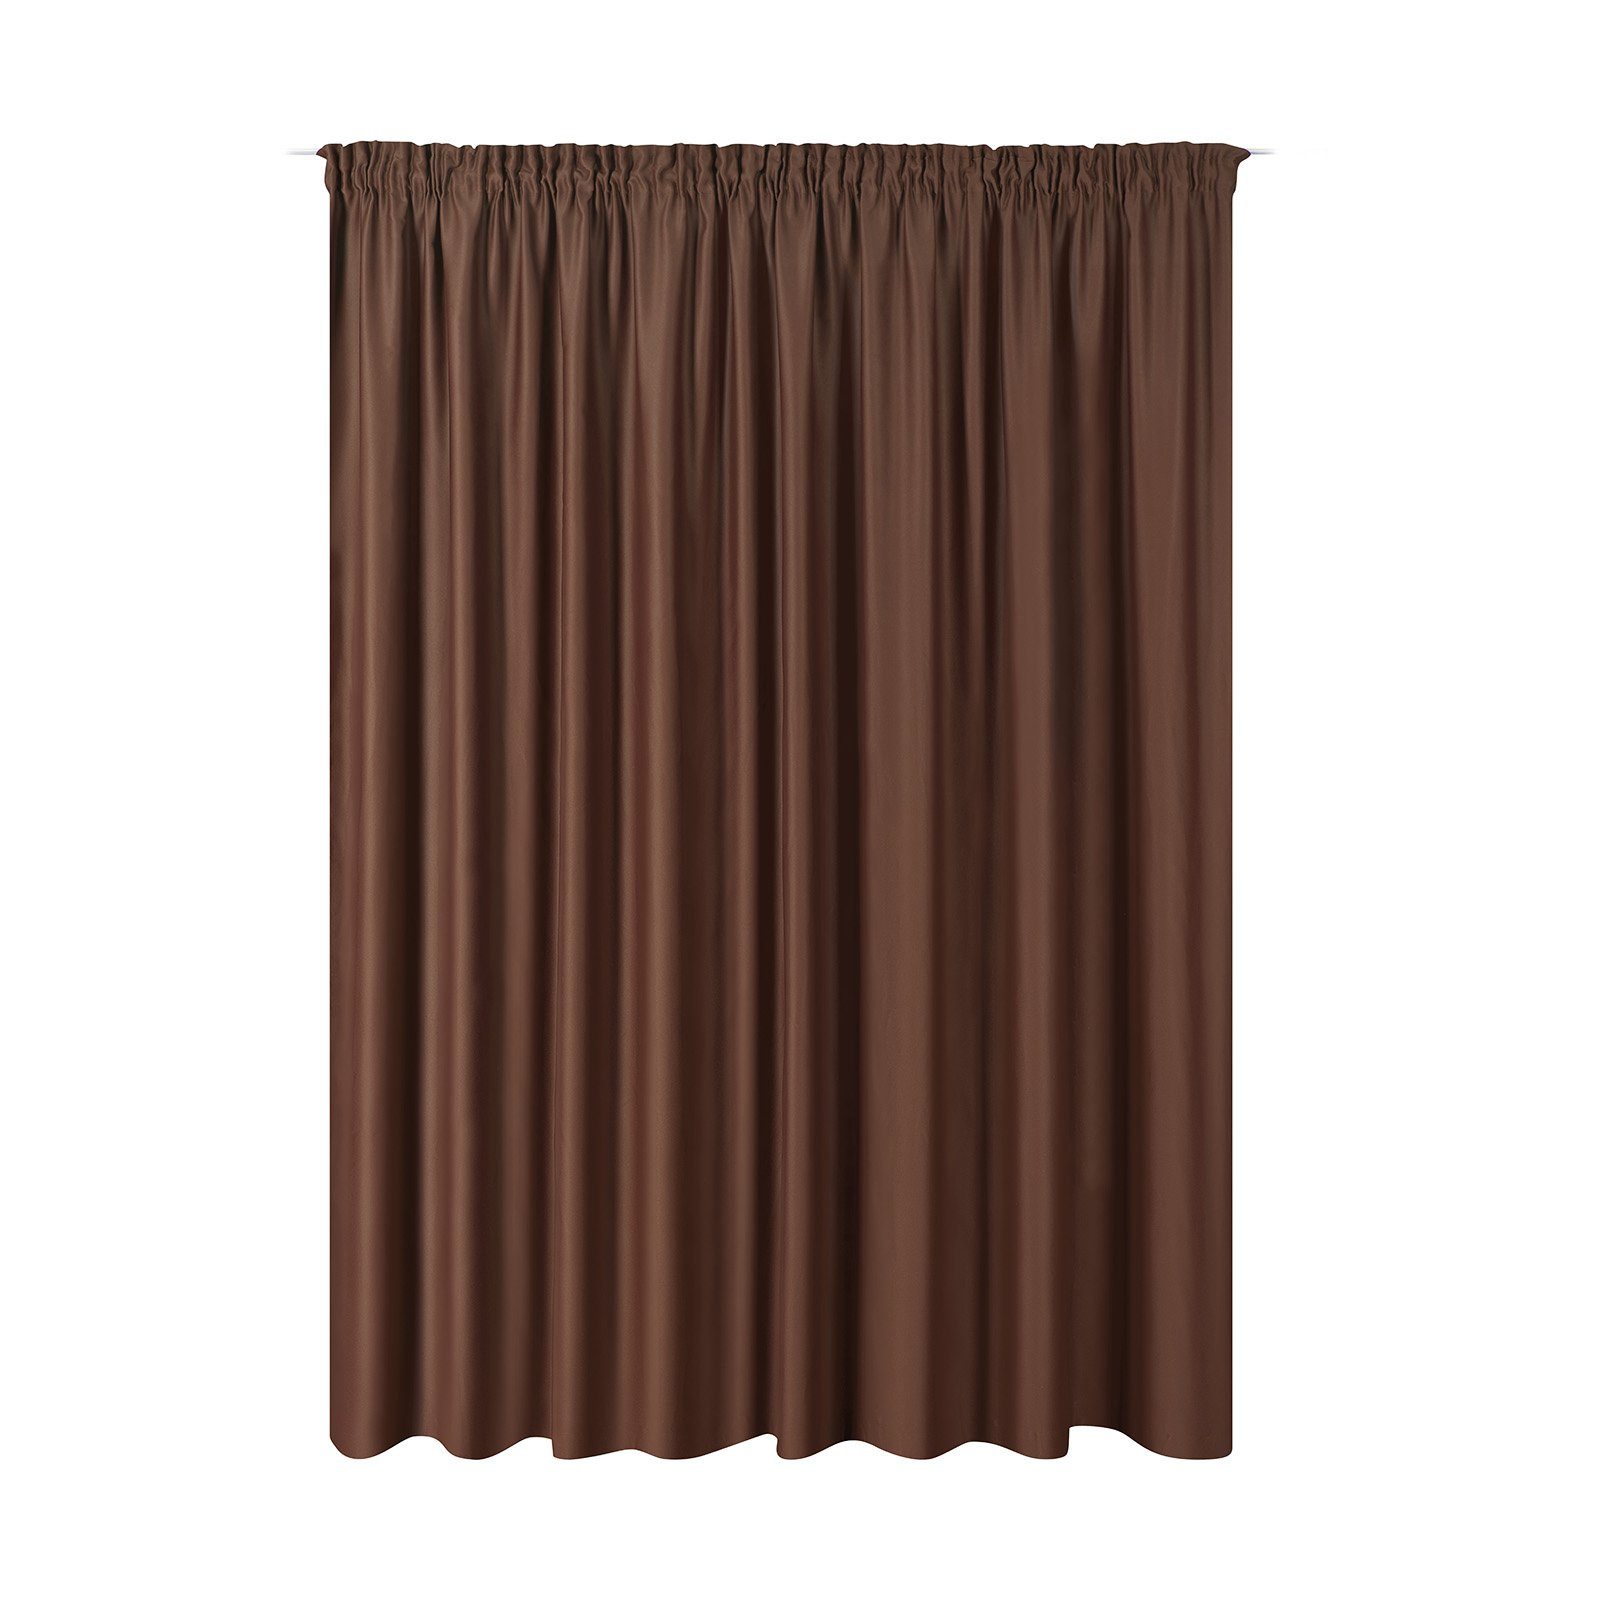 Vorhang Vorhang blickdicht, 300x245cm, Kräuselband, braun, JEMIDI Dunkelbraun | Fertiggardinen